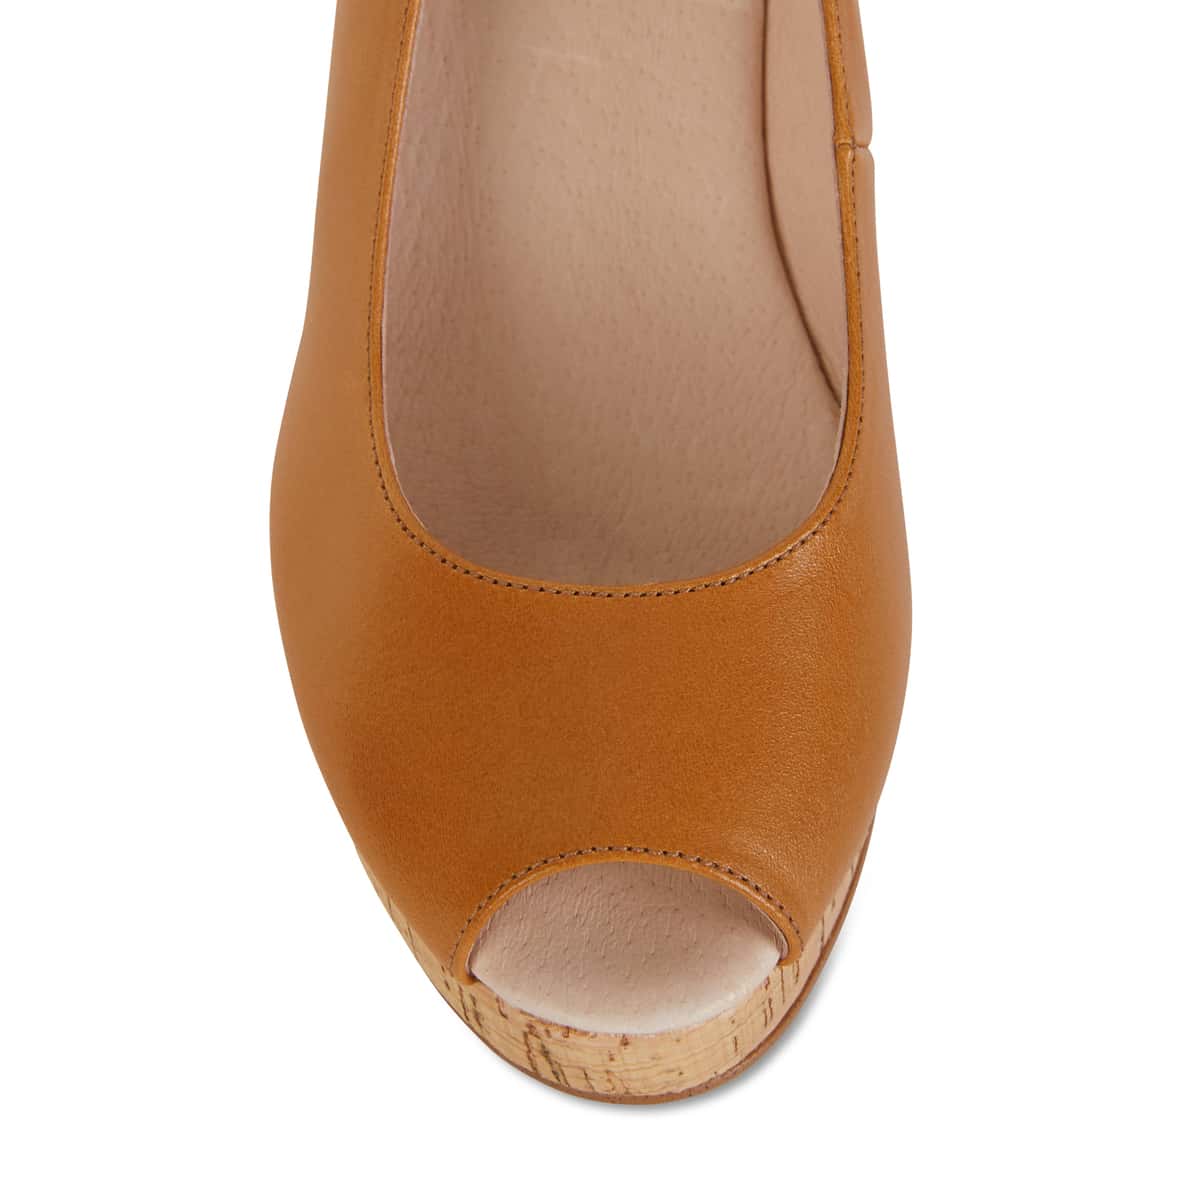 Davina Heel in Light Tan Leather